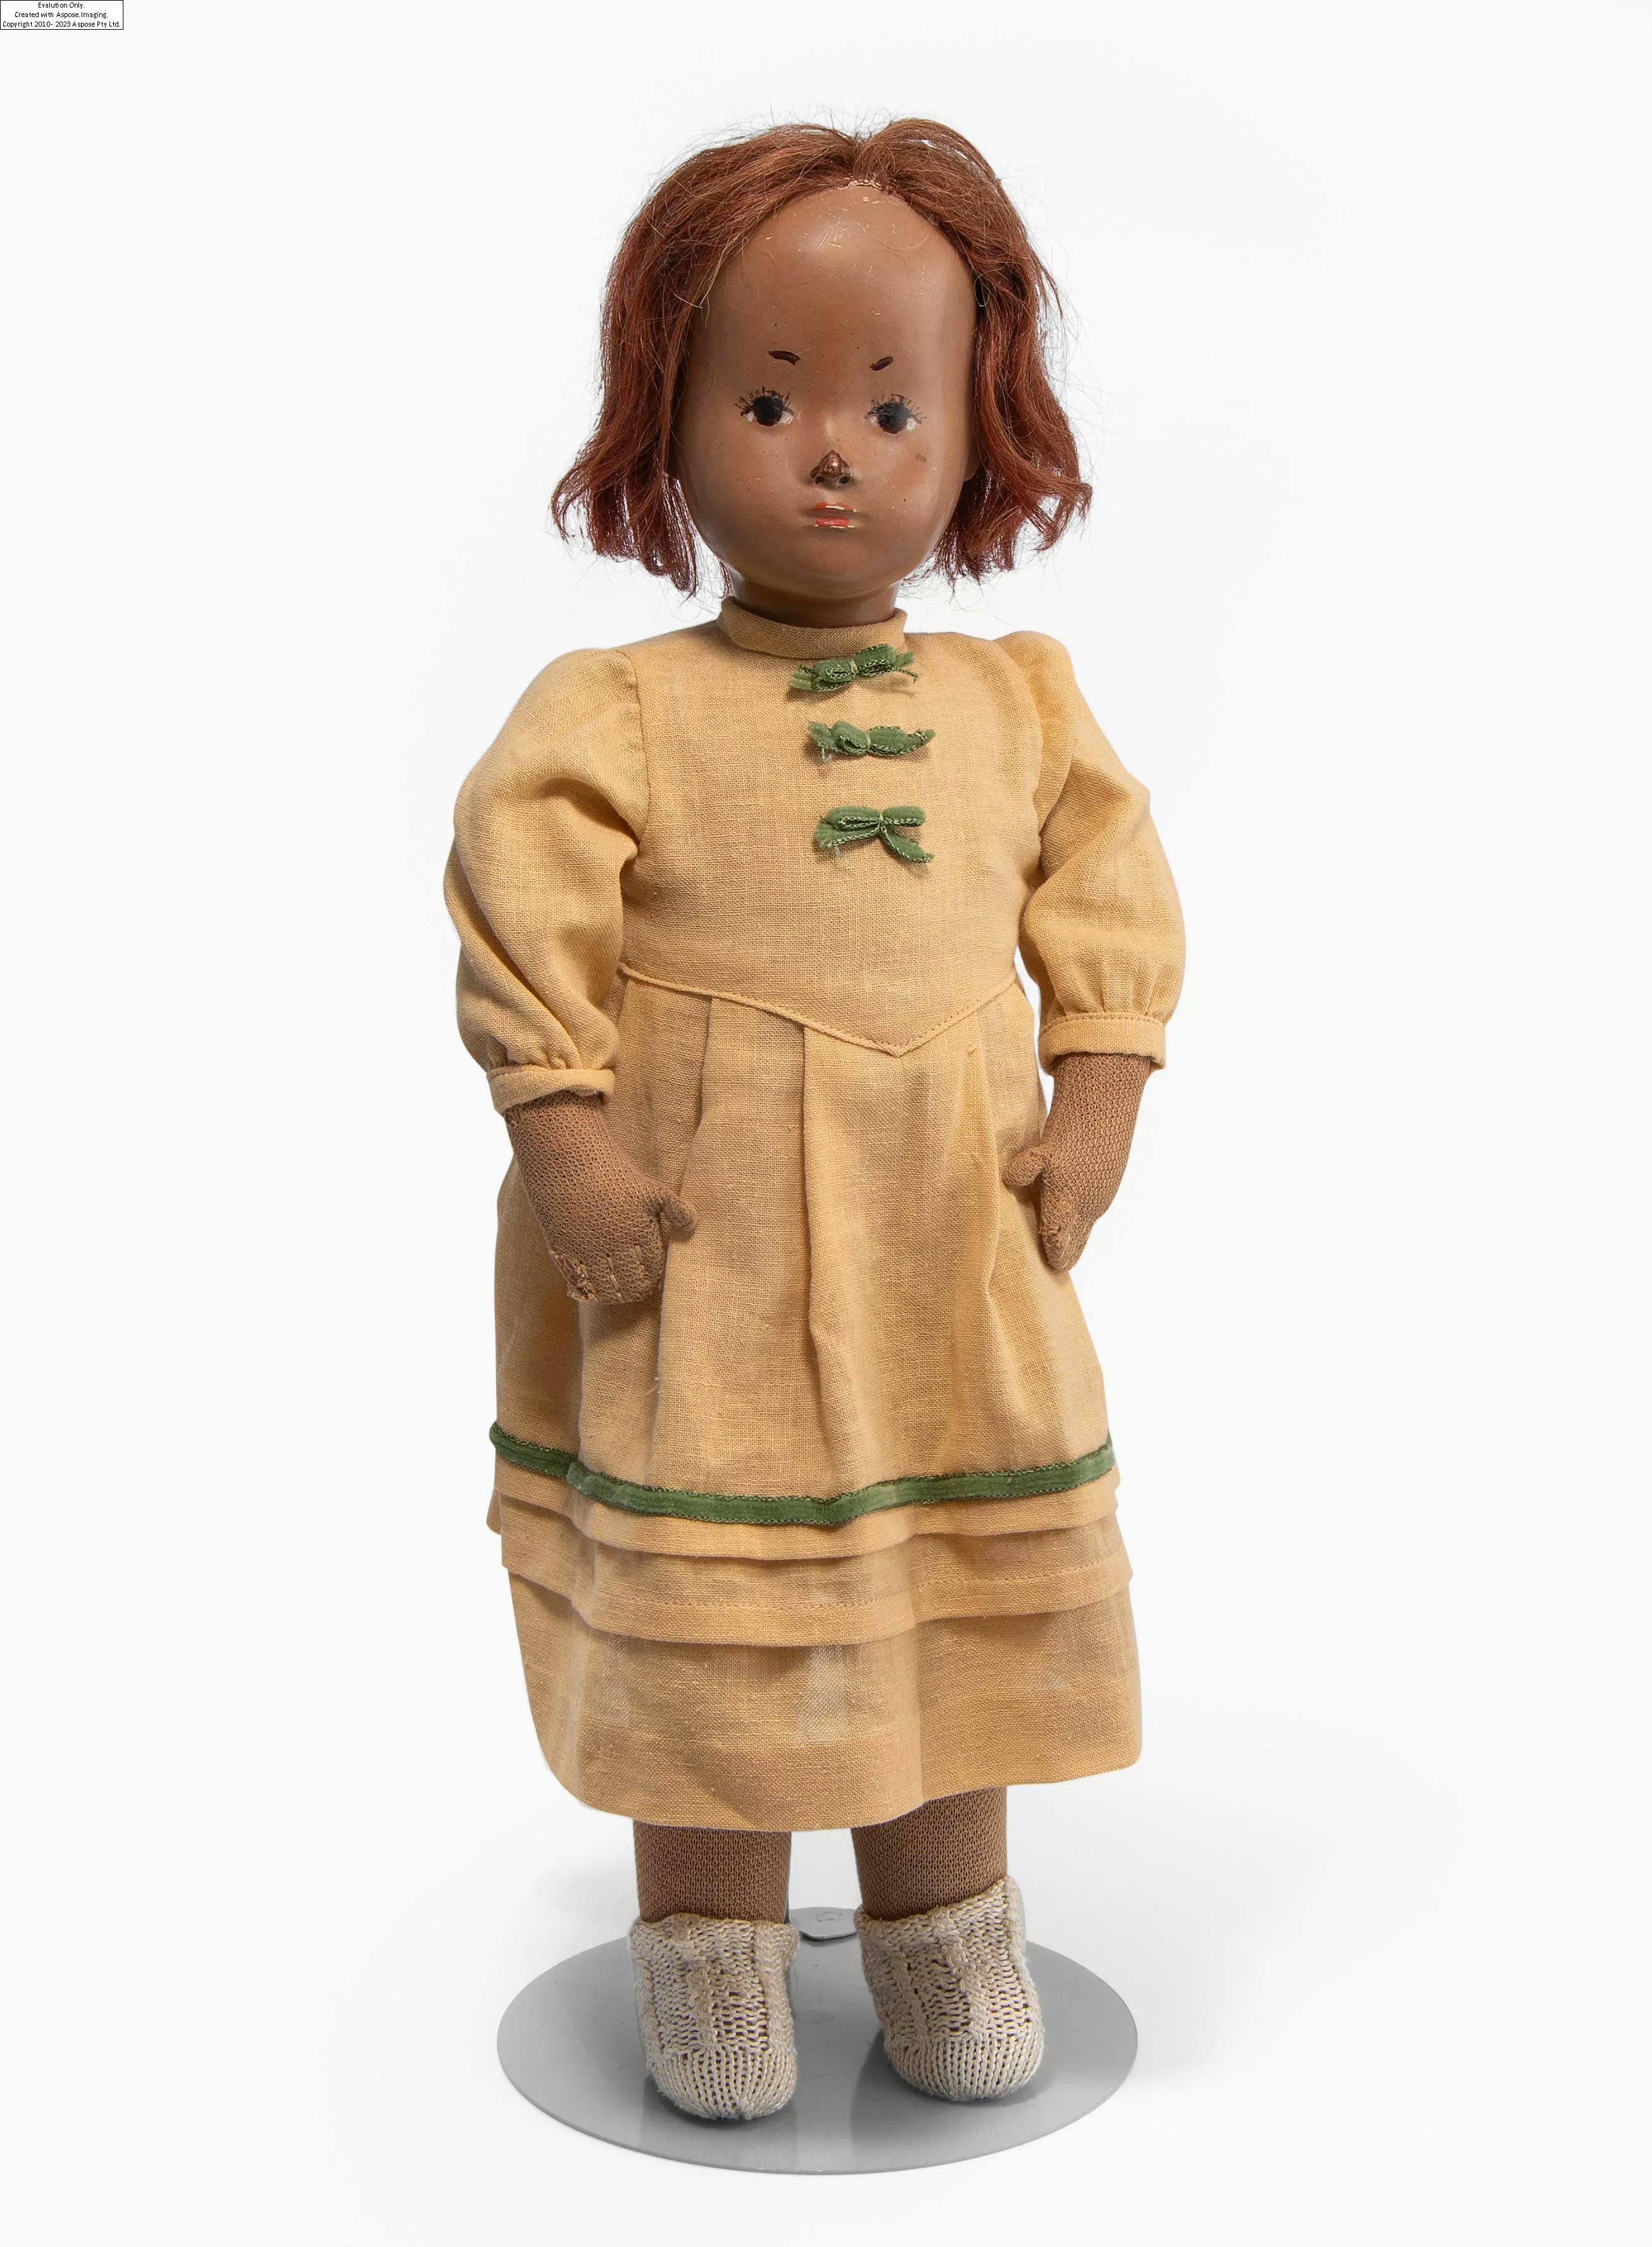 Sasha Morgenthaler (1893–1975), Puppe by Sasha Morgenthaler, circa 1960